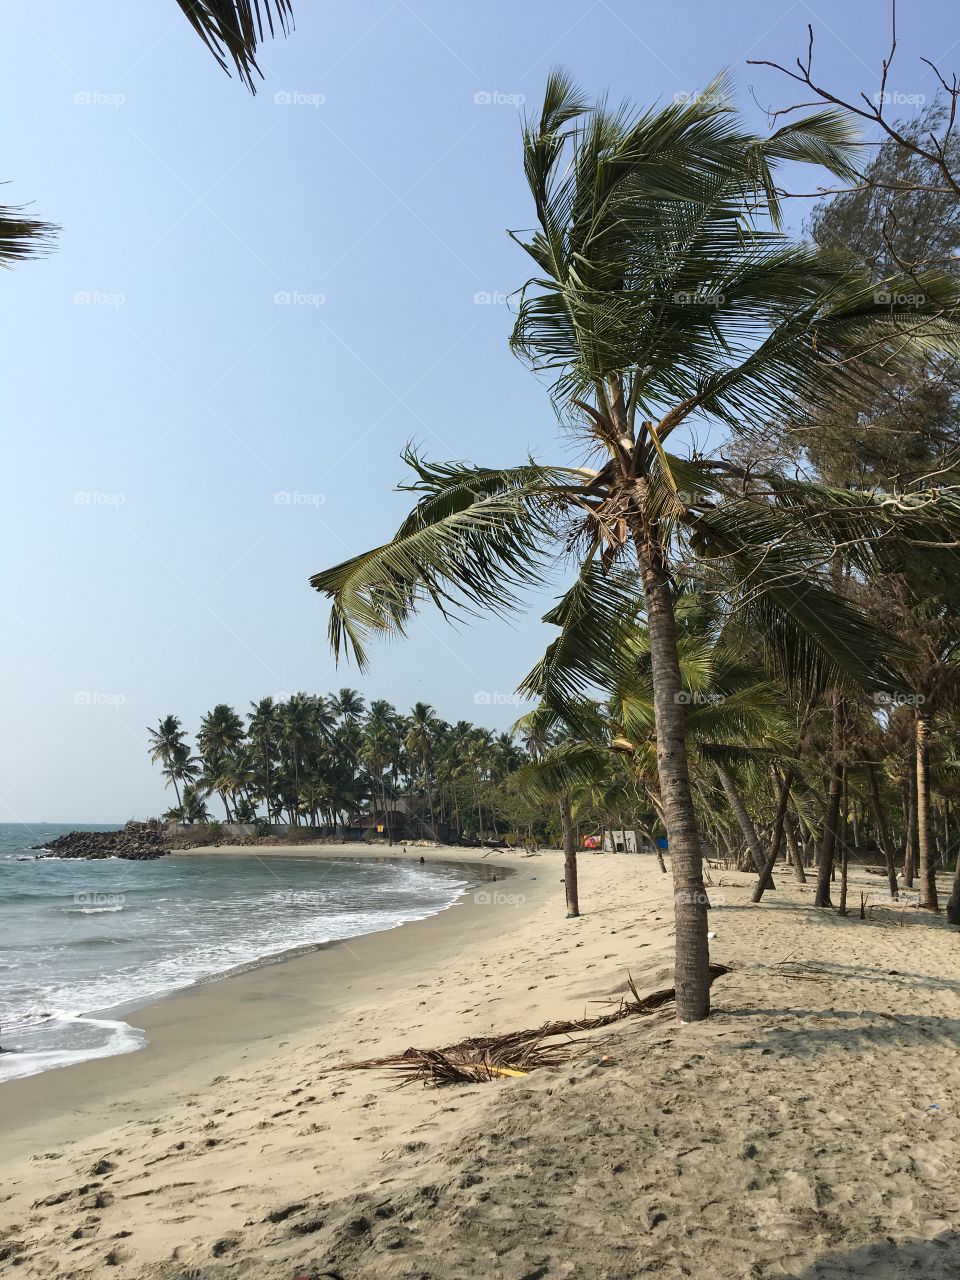 Tropical beach in Kerala, India.